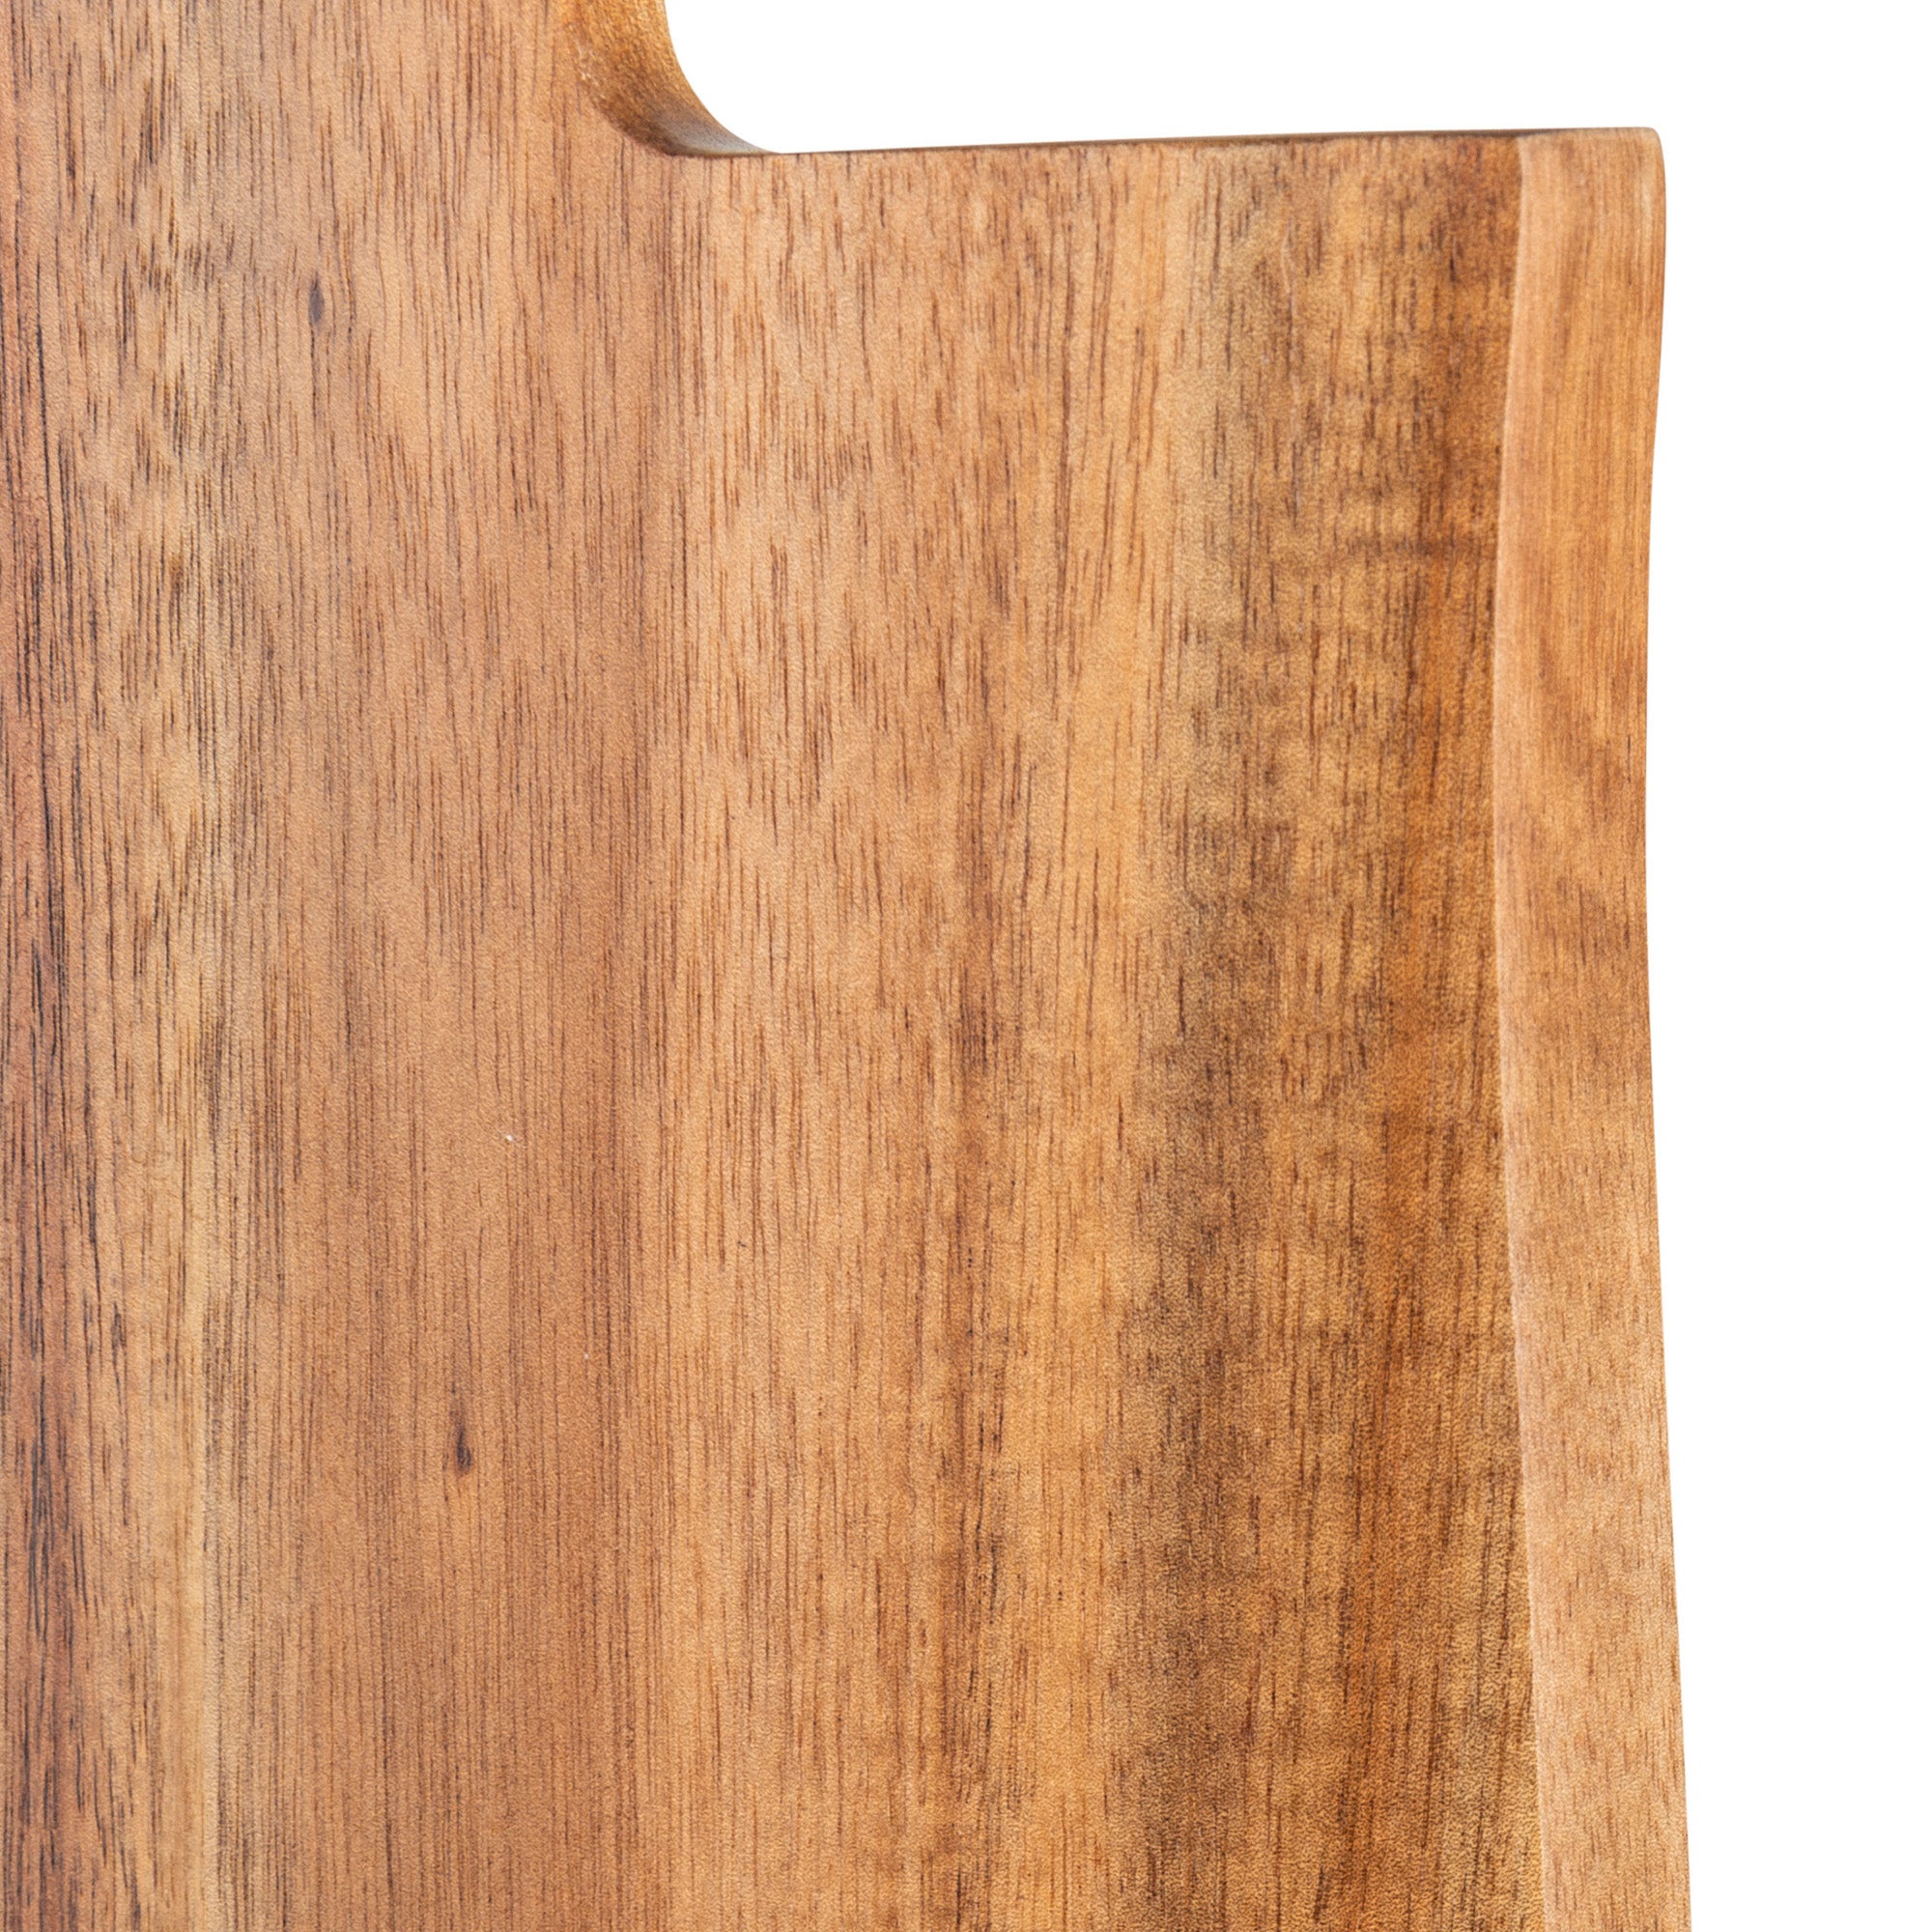 Denmark Acacia Wood 2pc Cutting Board Set - 13 and 15.25